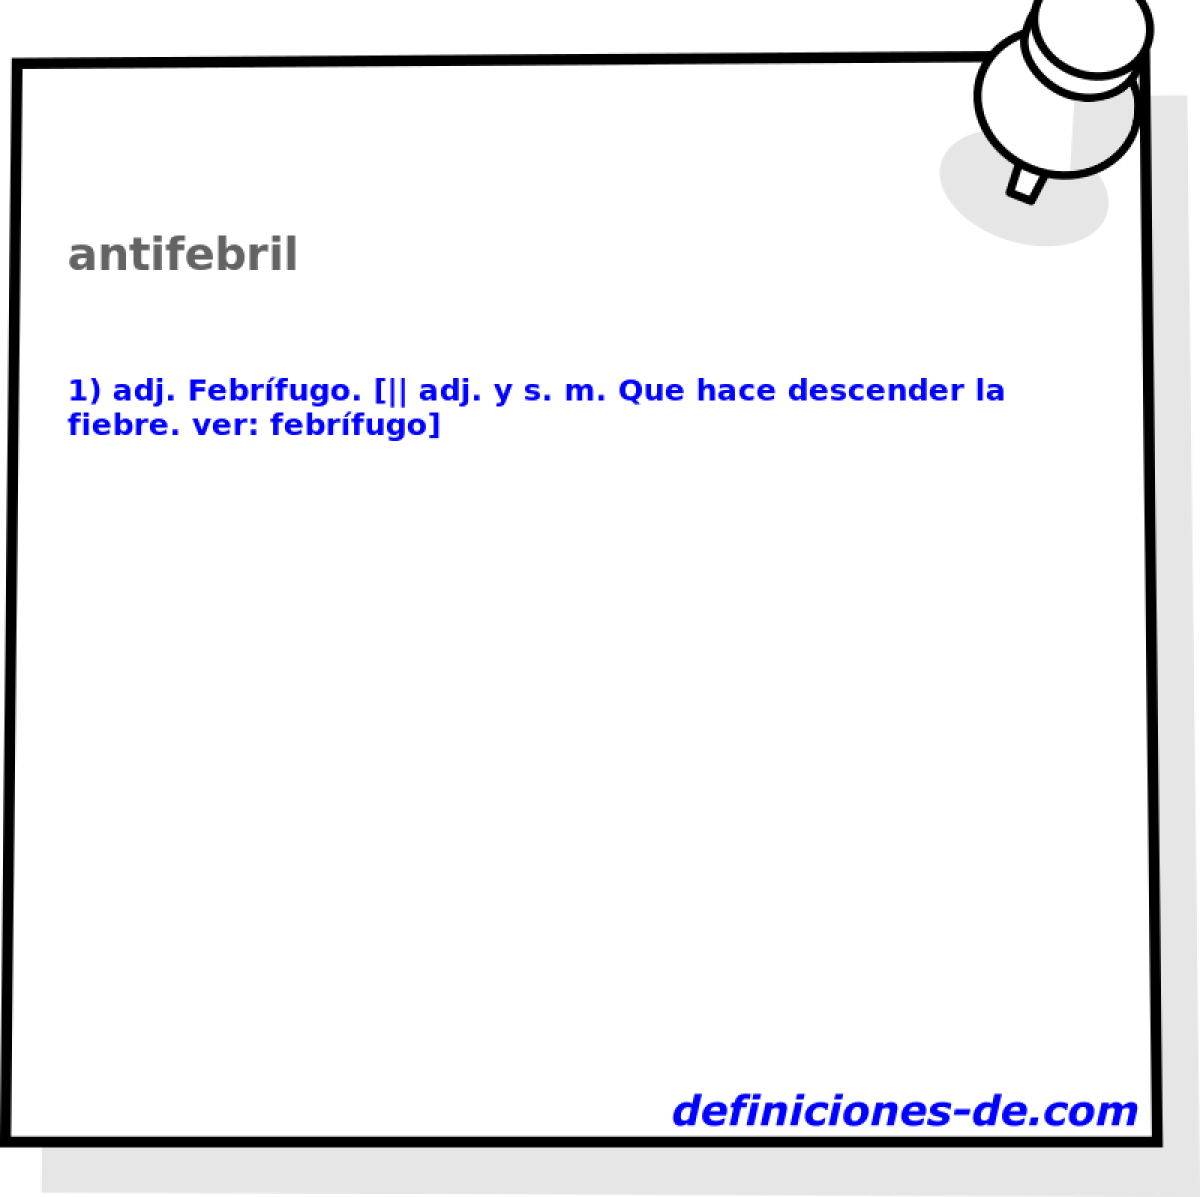 antifebril 